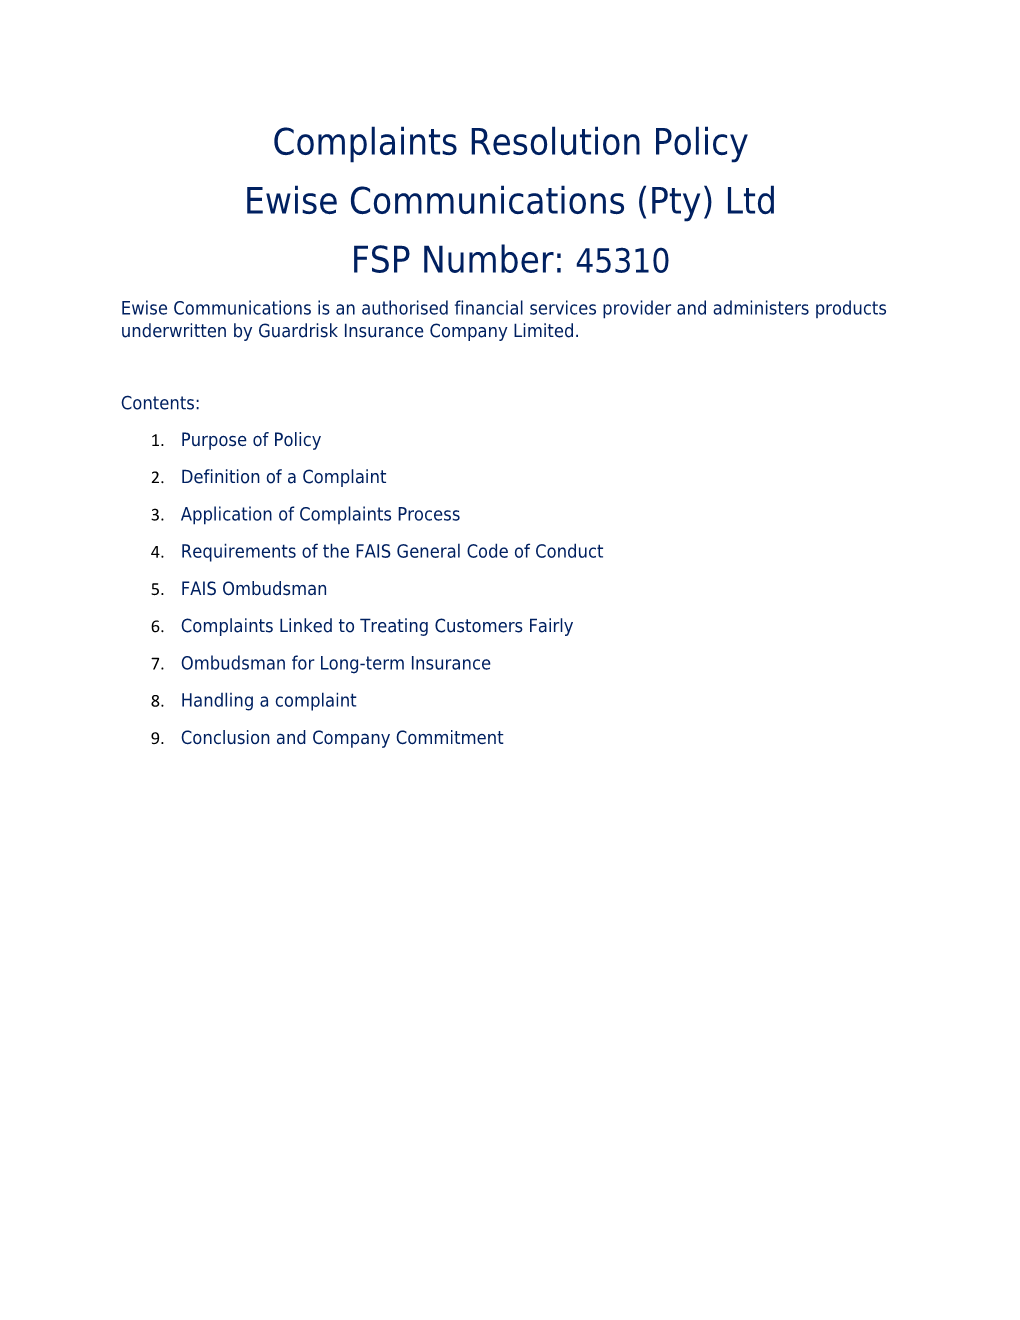 Ewise Communications (Pty) Ltd